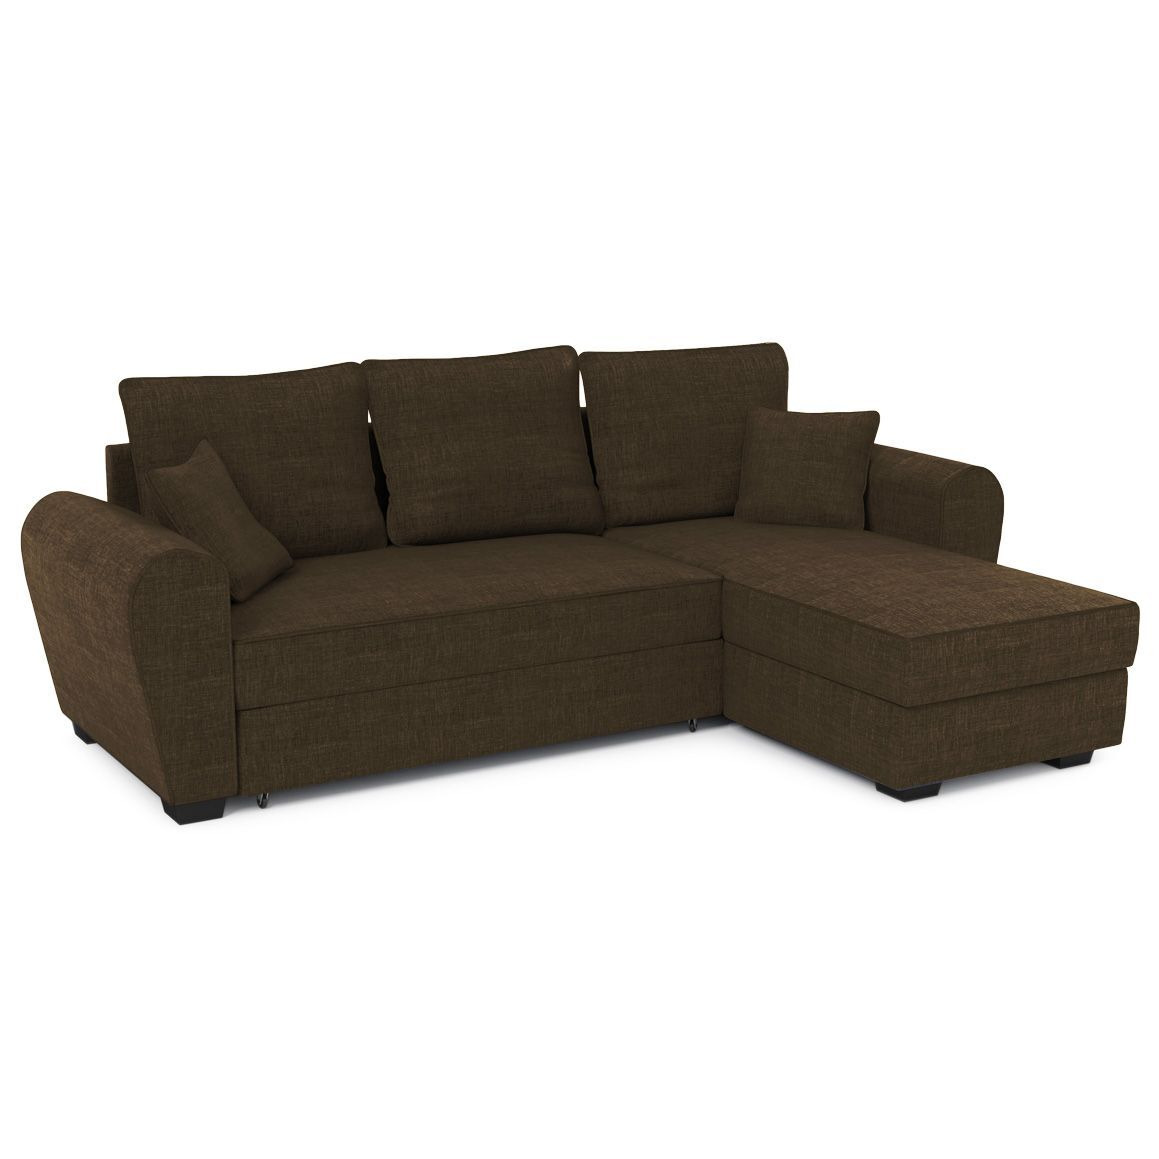 Nicea Corner Sofa Bed With Storage, brown - image 1